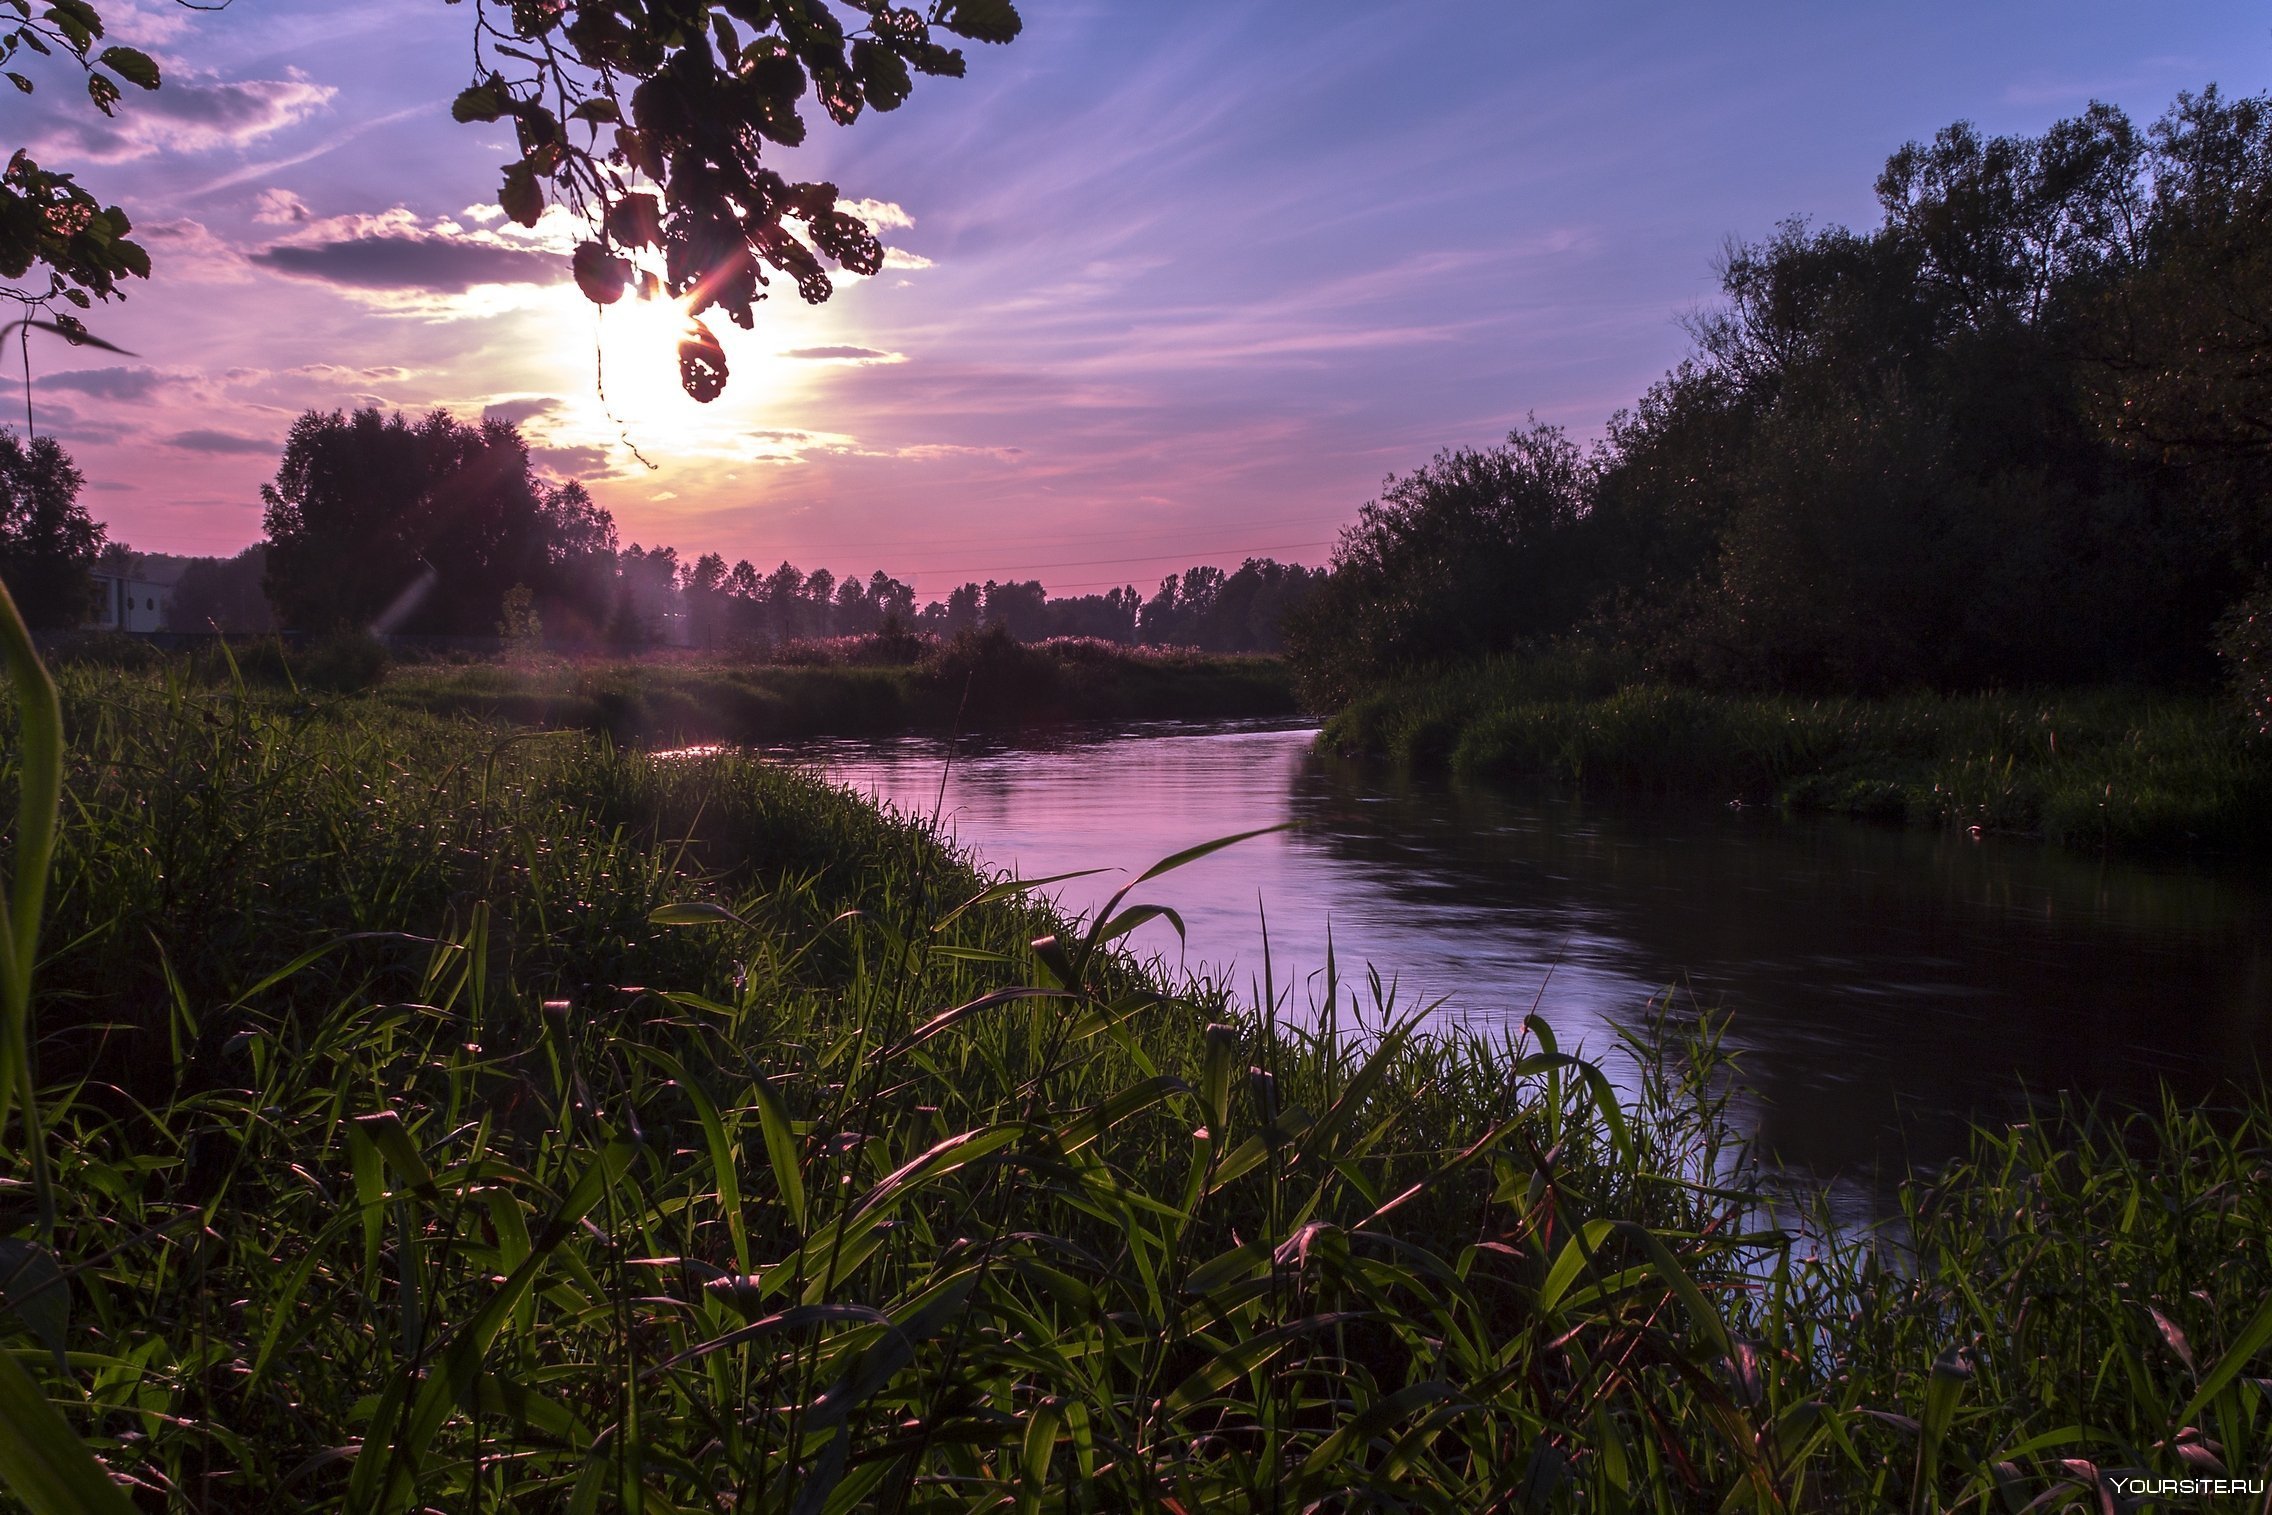 На зеленом лугу поздним вечером. "Летний вечер" (ф.Тютчев, 1828 г.). Закат на реке. Природа вечер. Вечерний пейзаж.